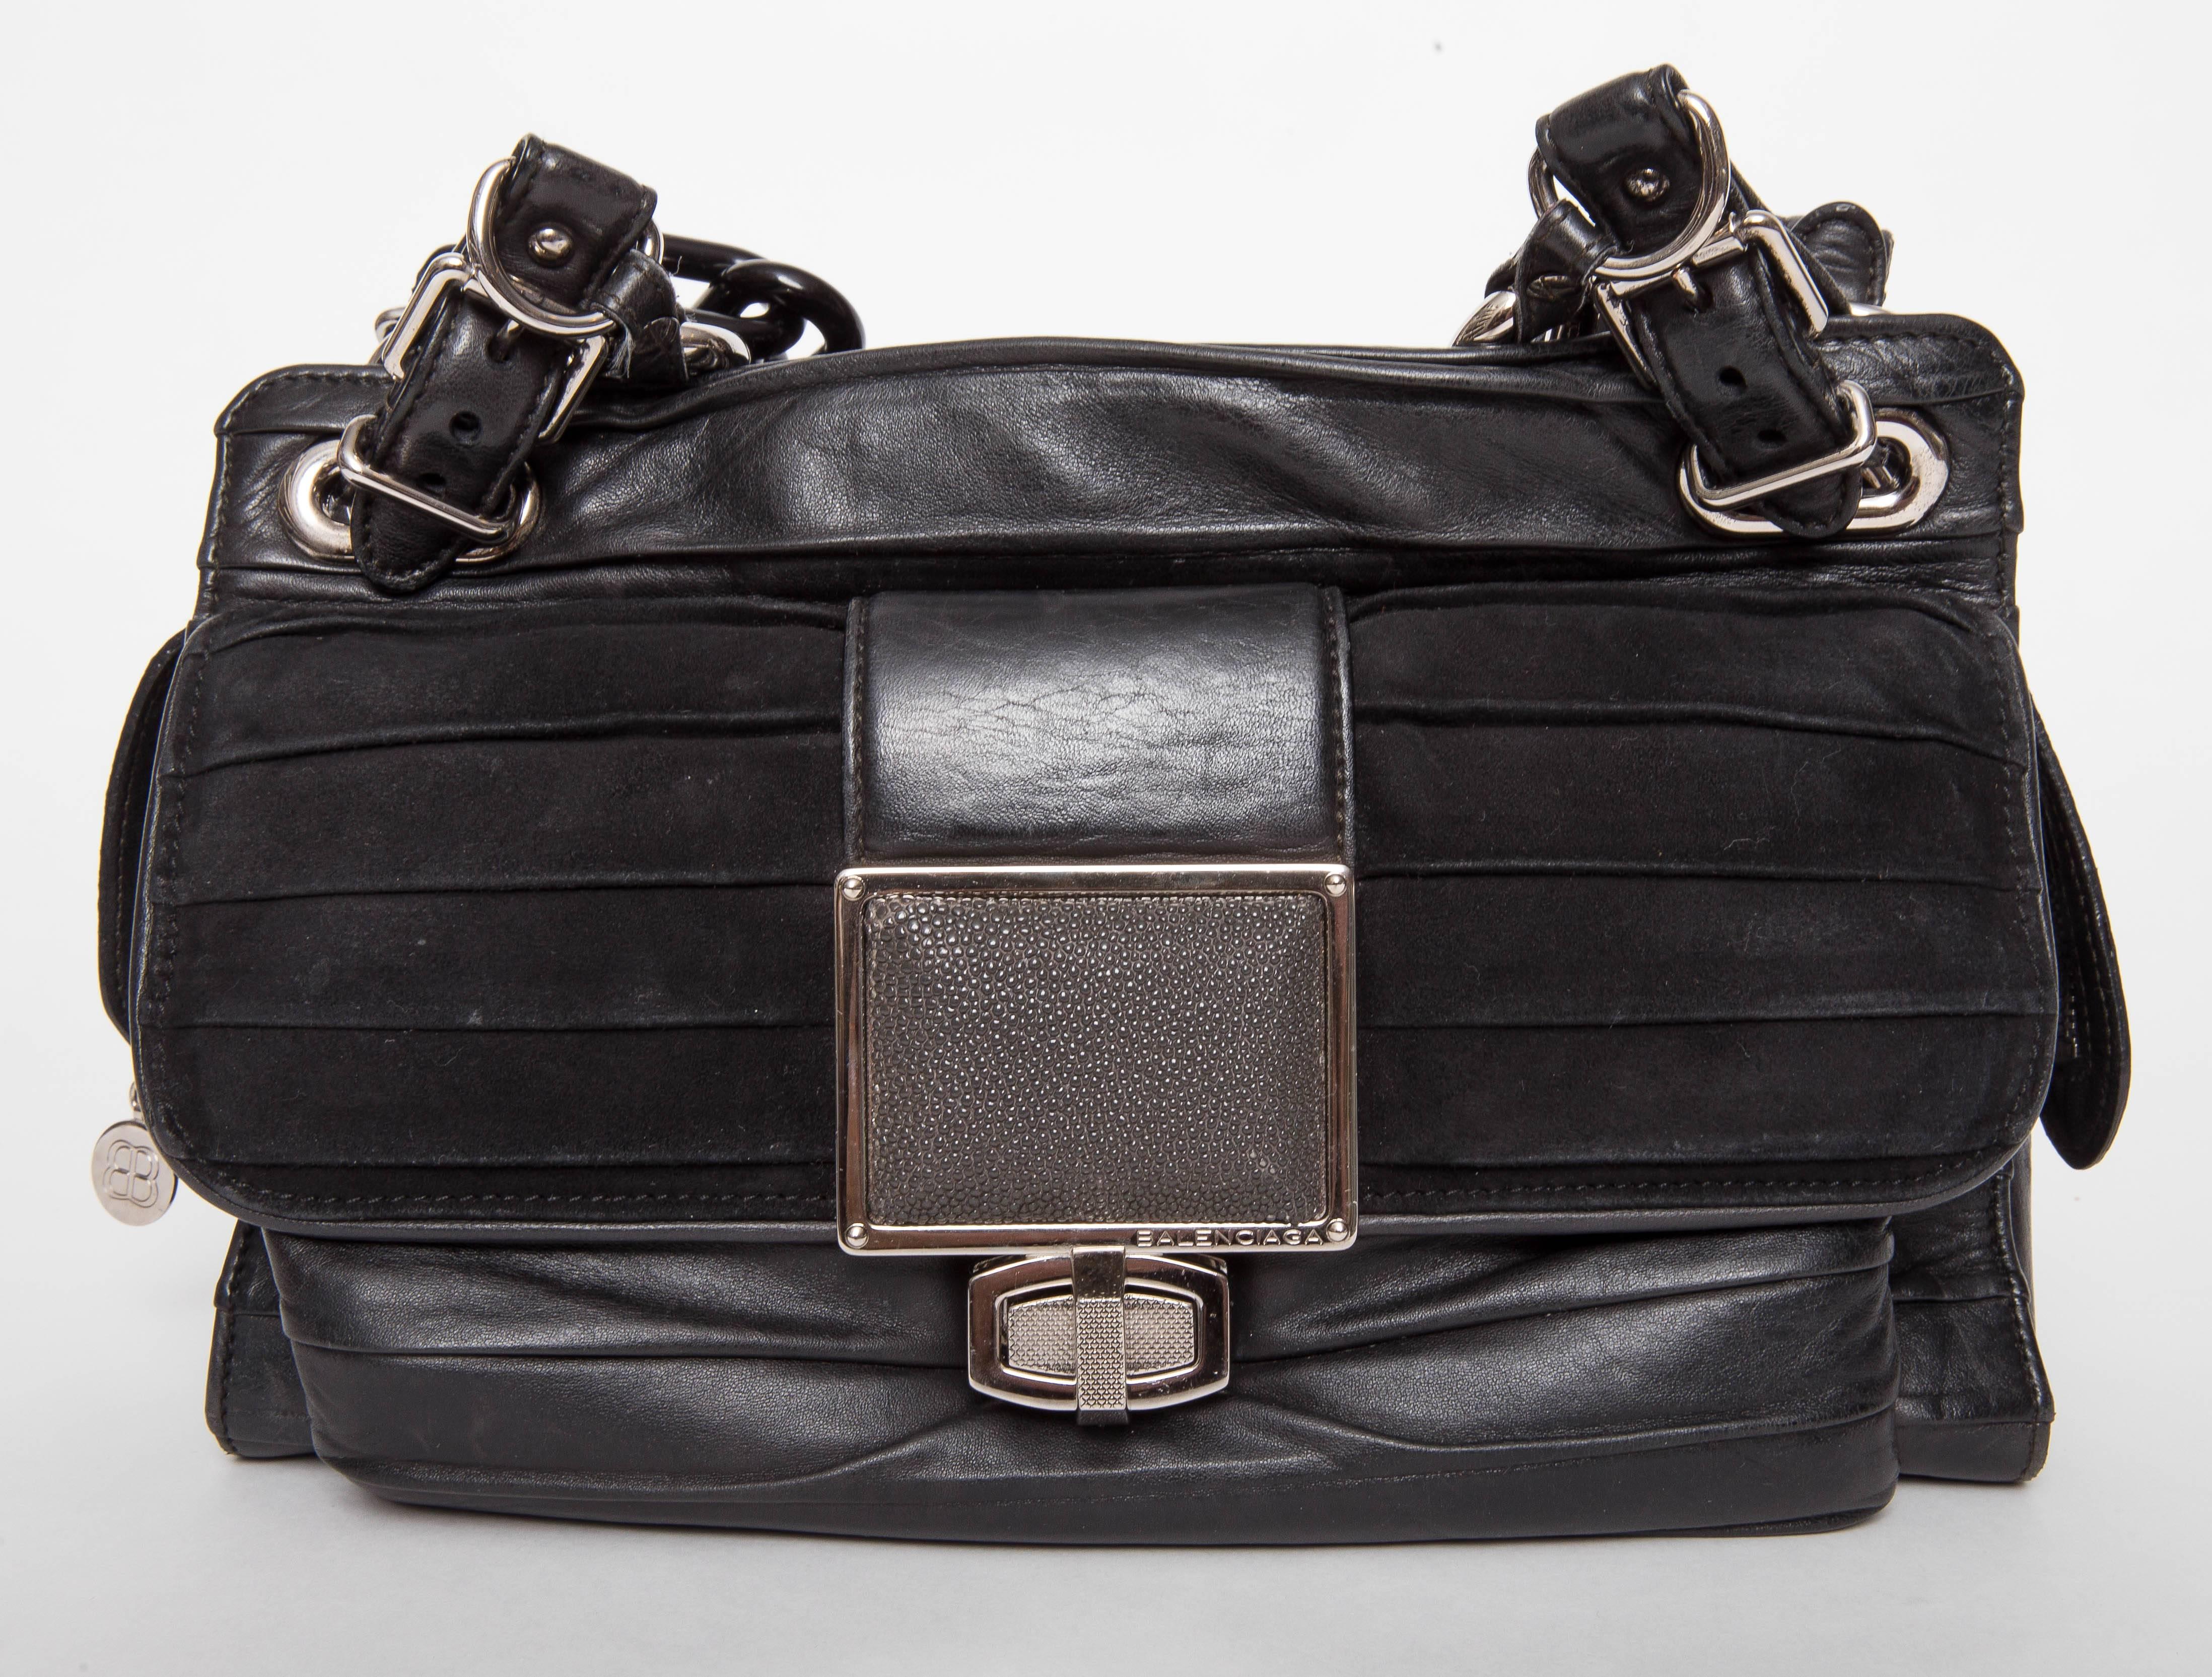 Balenciaga Cherche Midi Crinkle Bag in Black In Good Condition For Sale In Westhampton Beach, NY